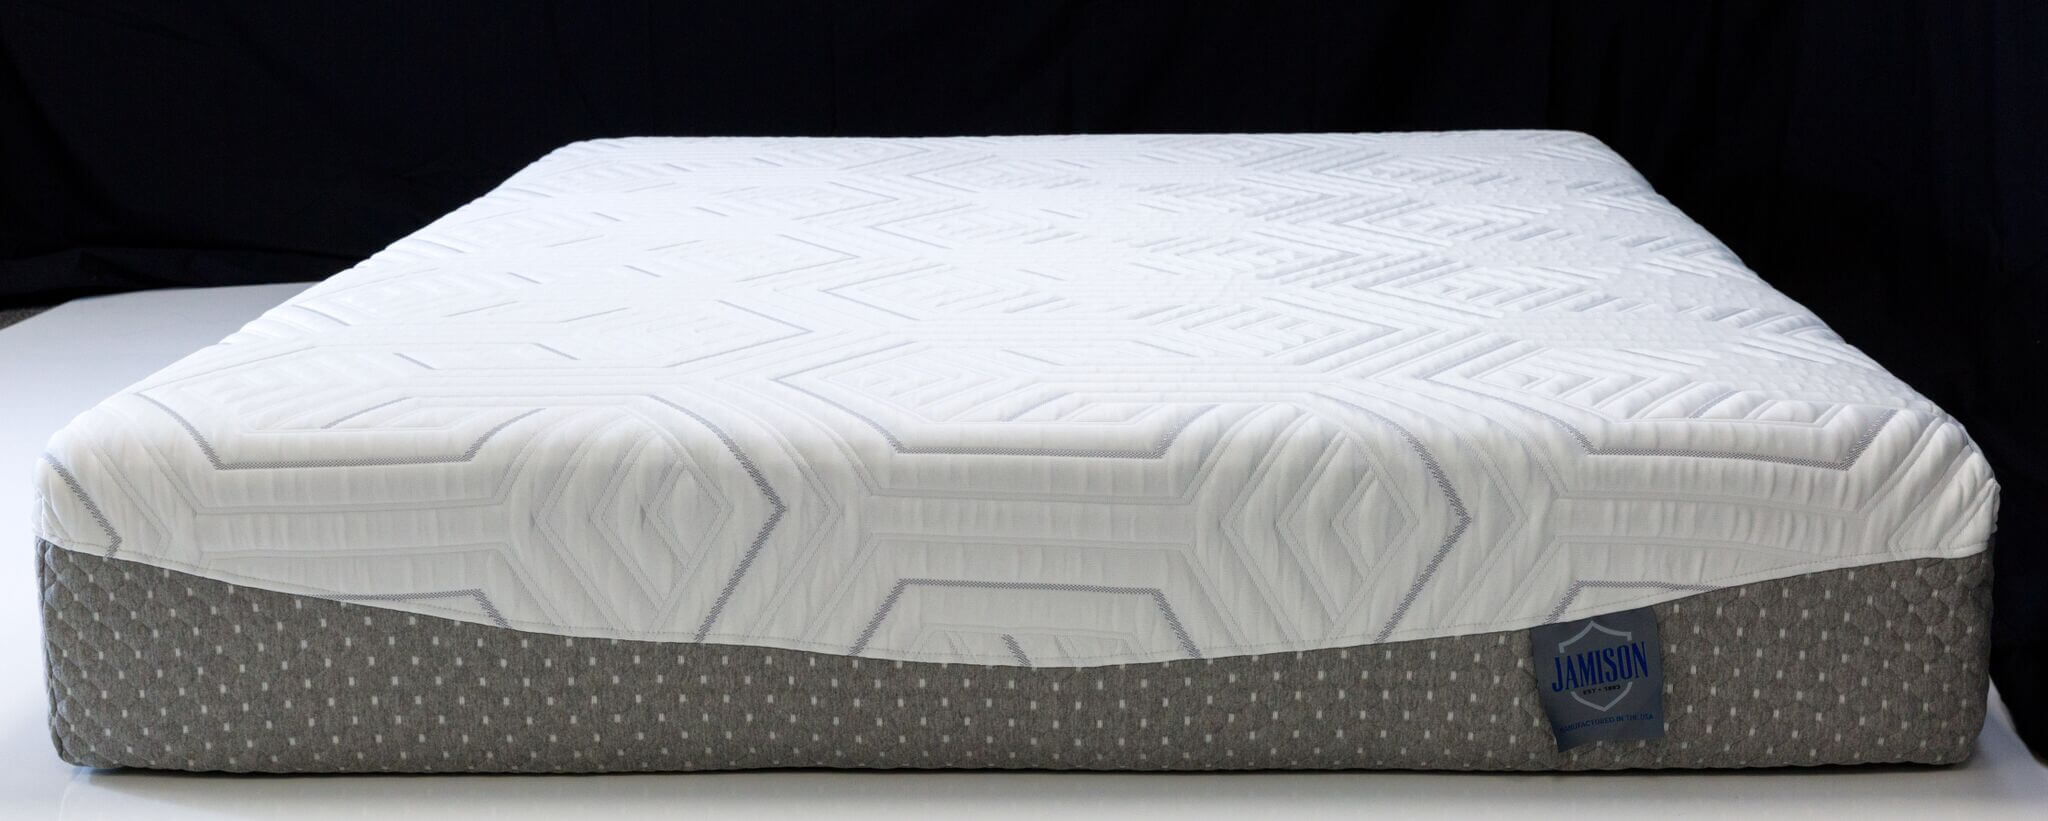 jamison foam and latex mattress